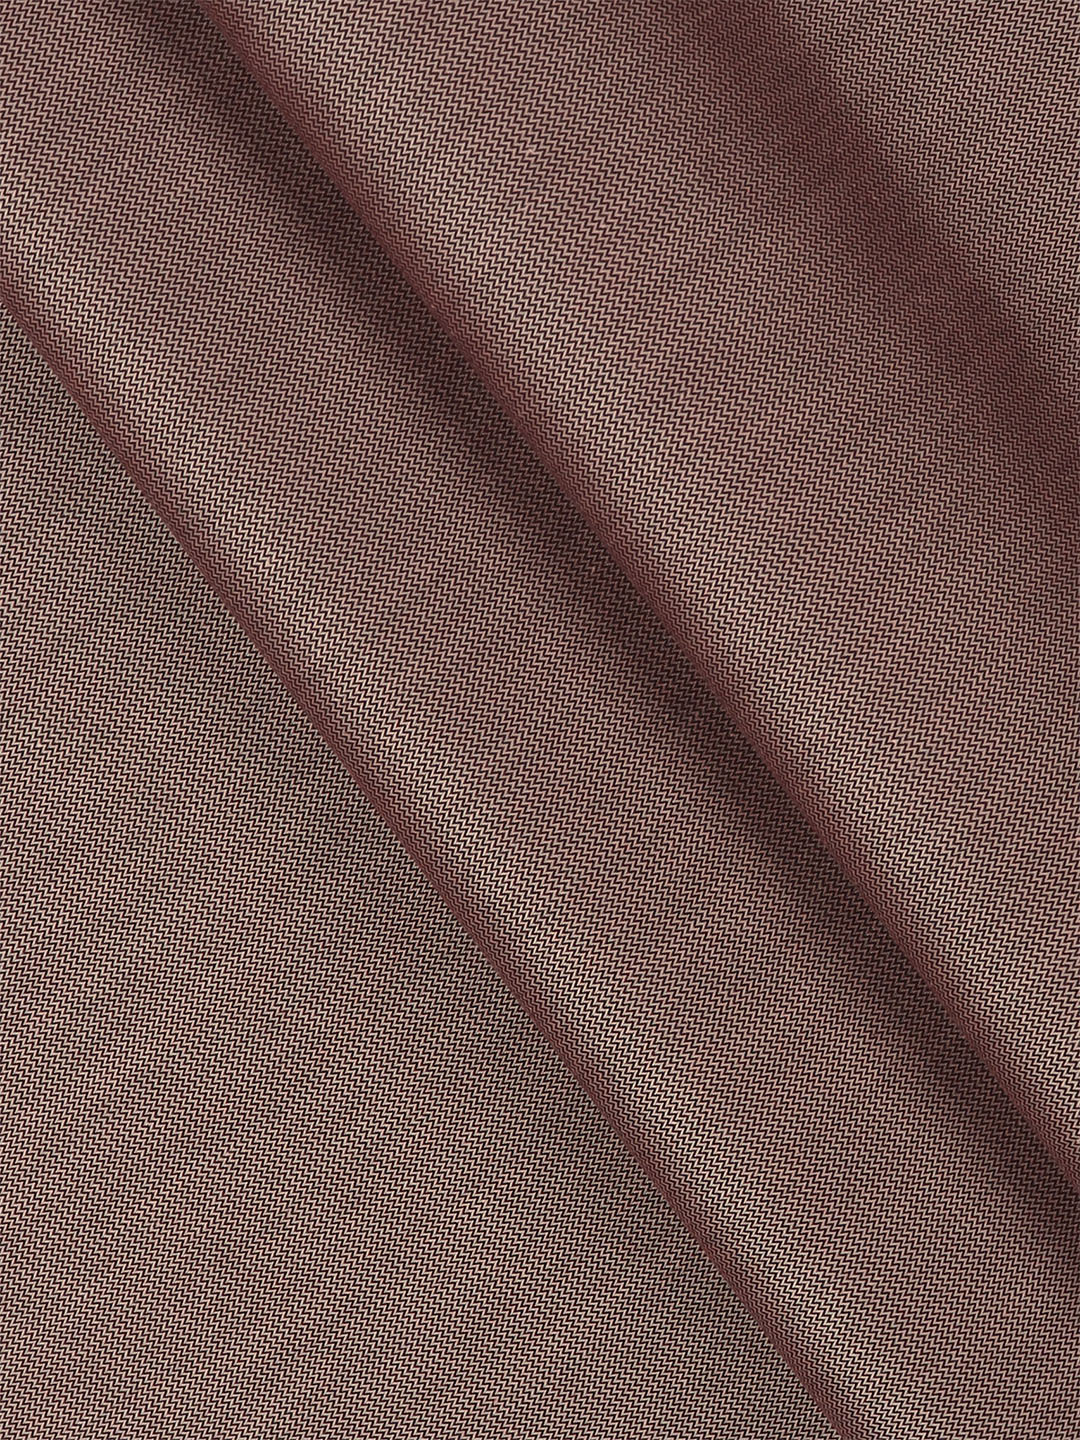 Cotton Maroon Self Design Shirt Fabric- Infinity